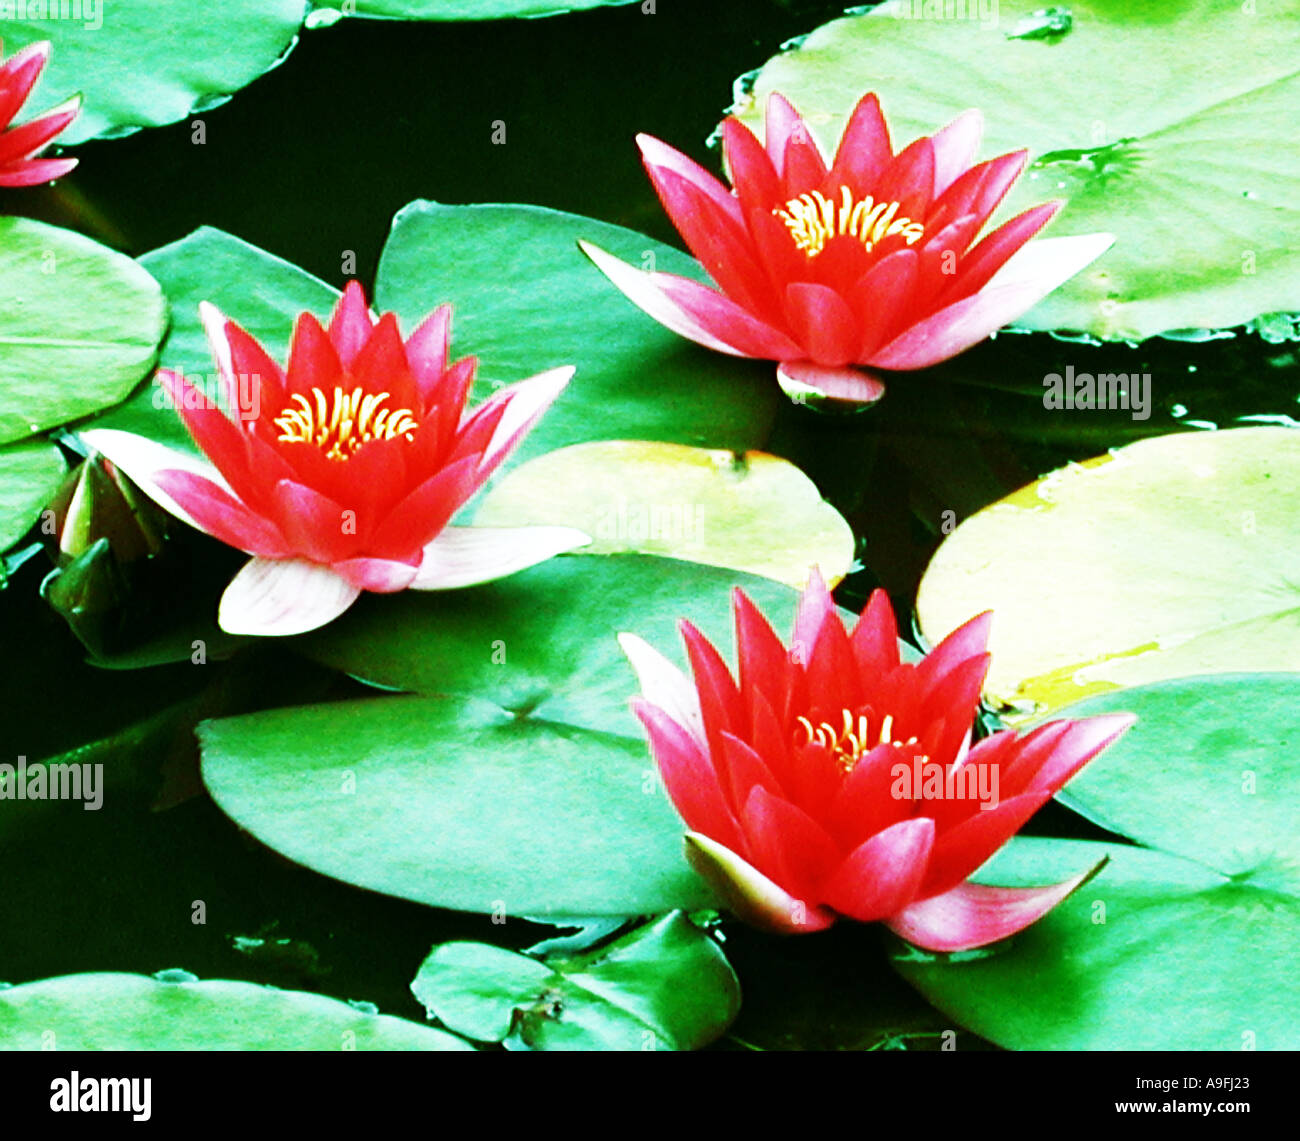 COMMON NAME Water lily LATIN NAME Nymphaea Stock Photo